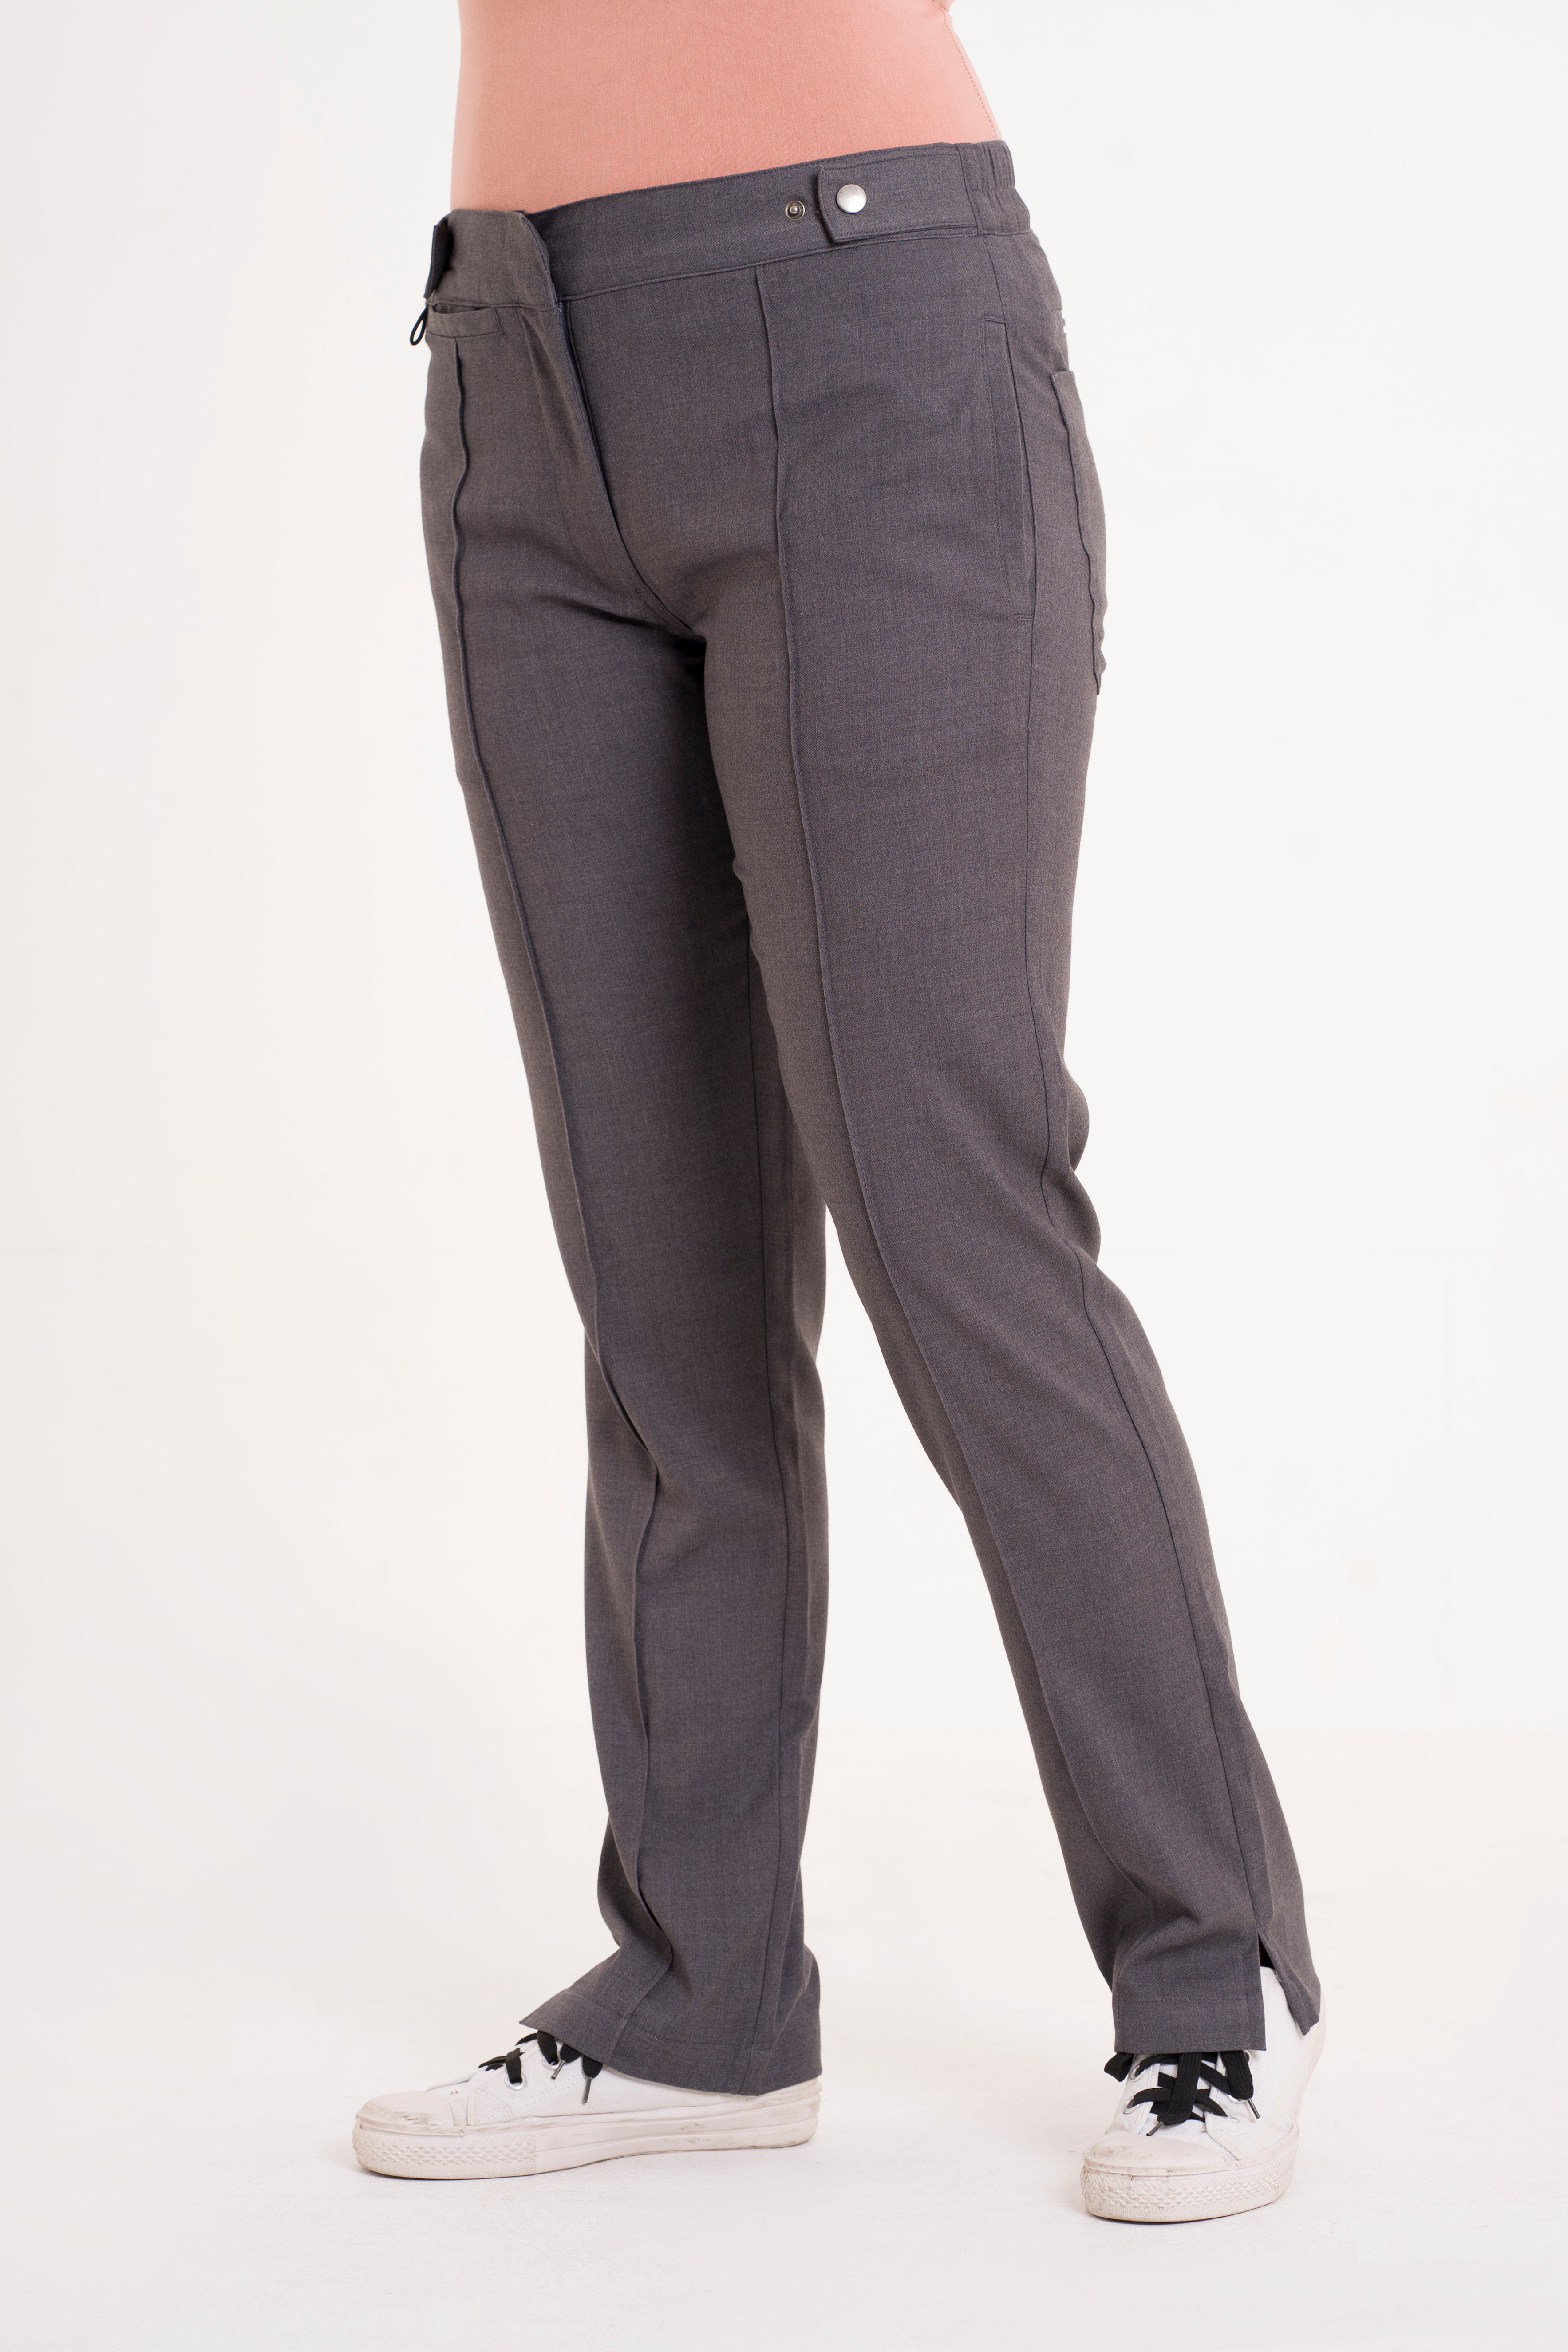 Ladies Black High Waist Trousers Quality Work School Stretch SUPER SKINNY  Pants. | eBay